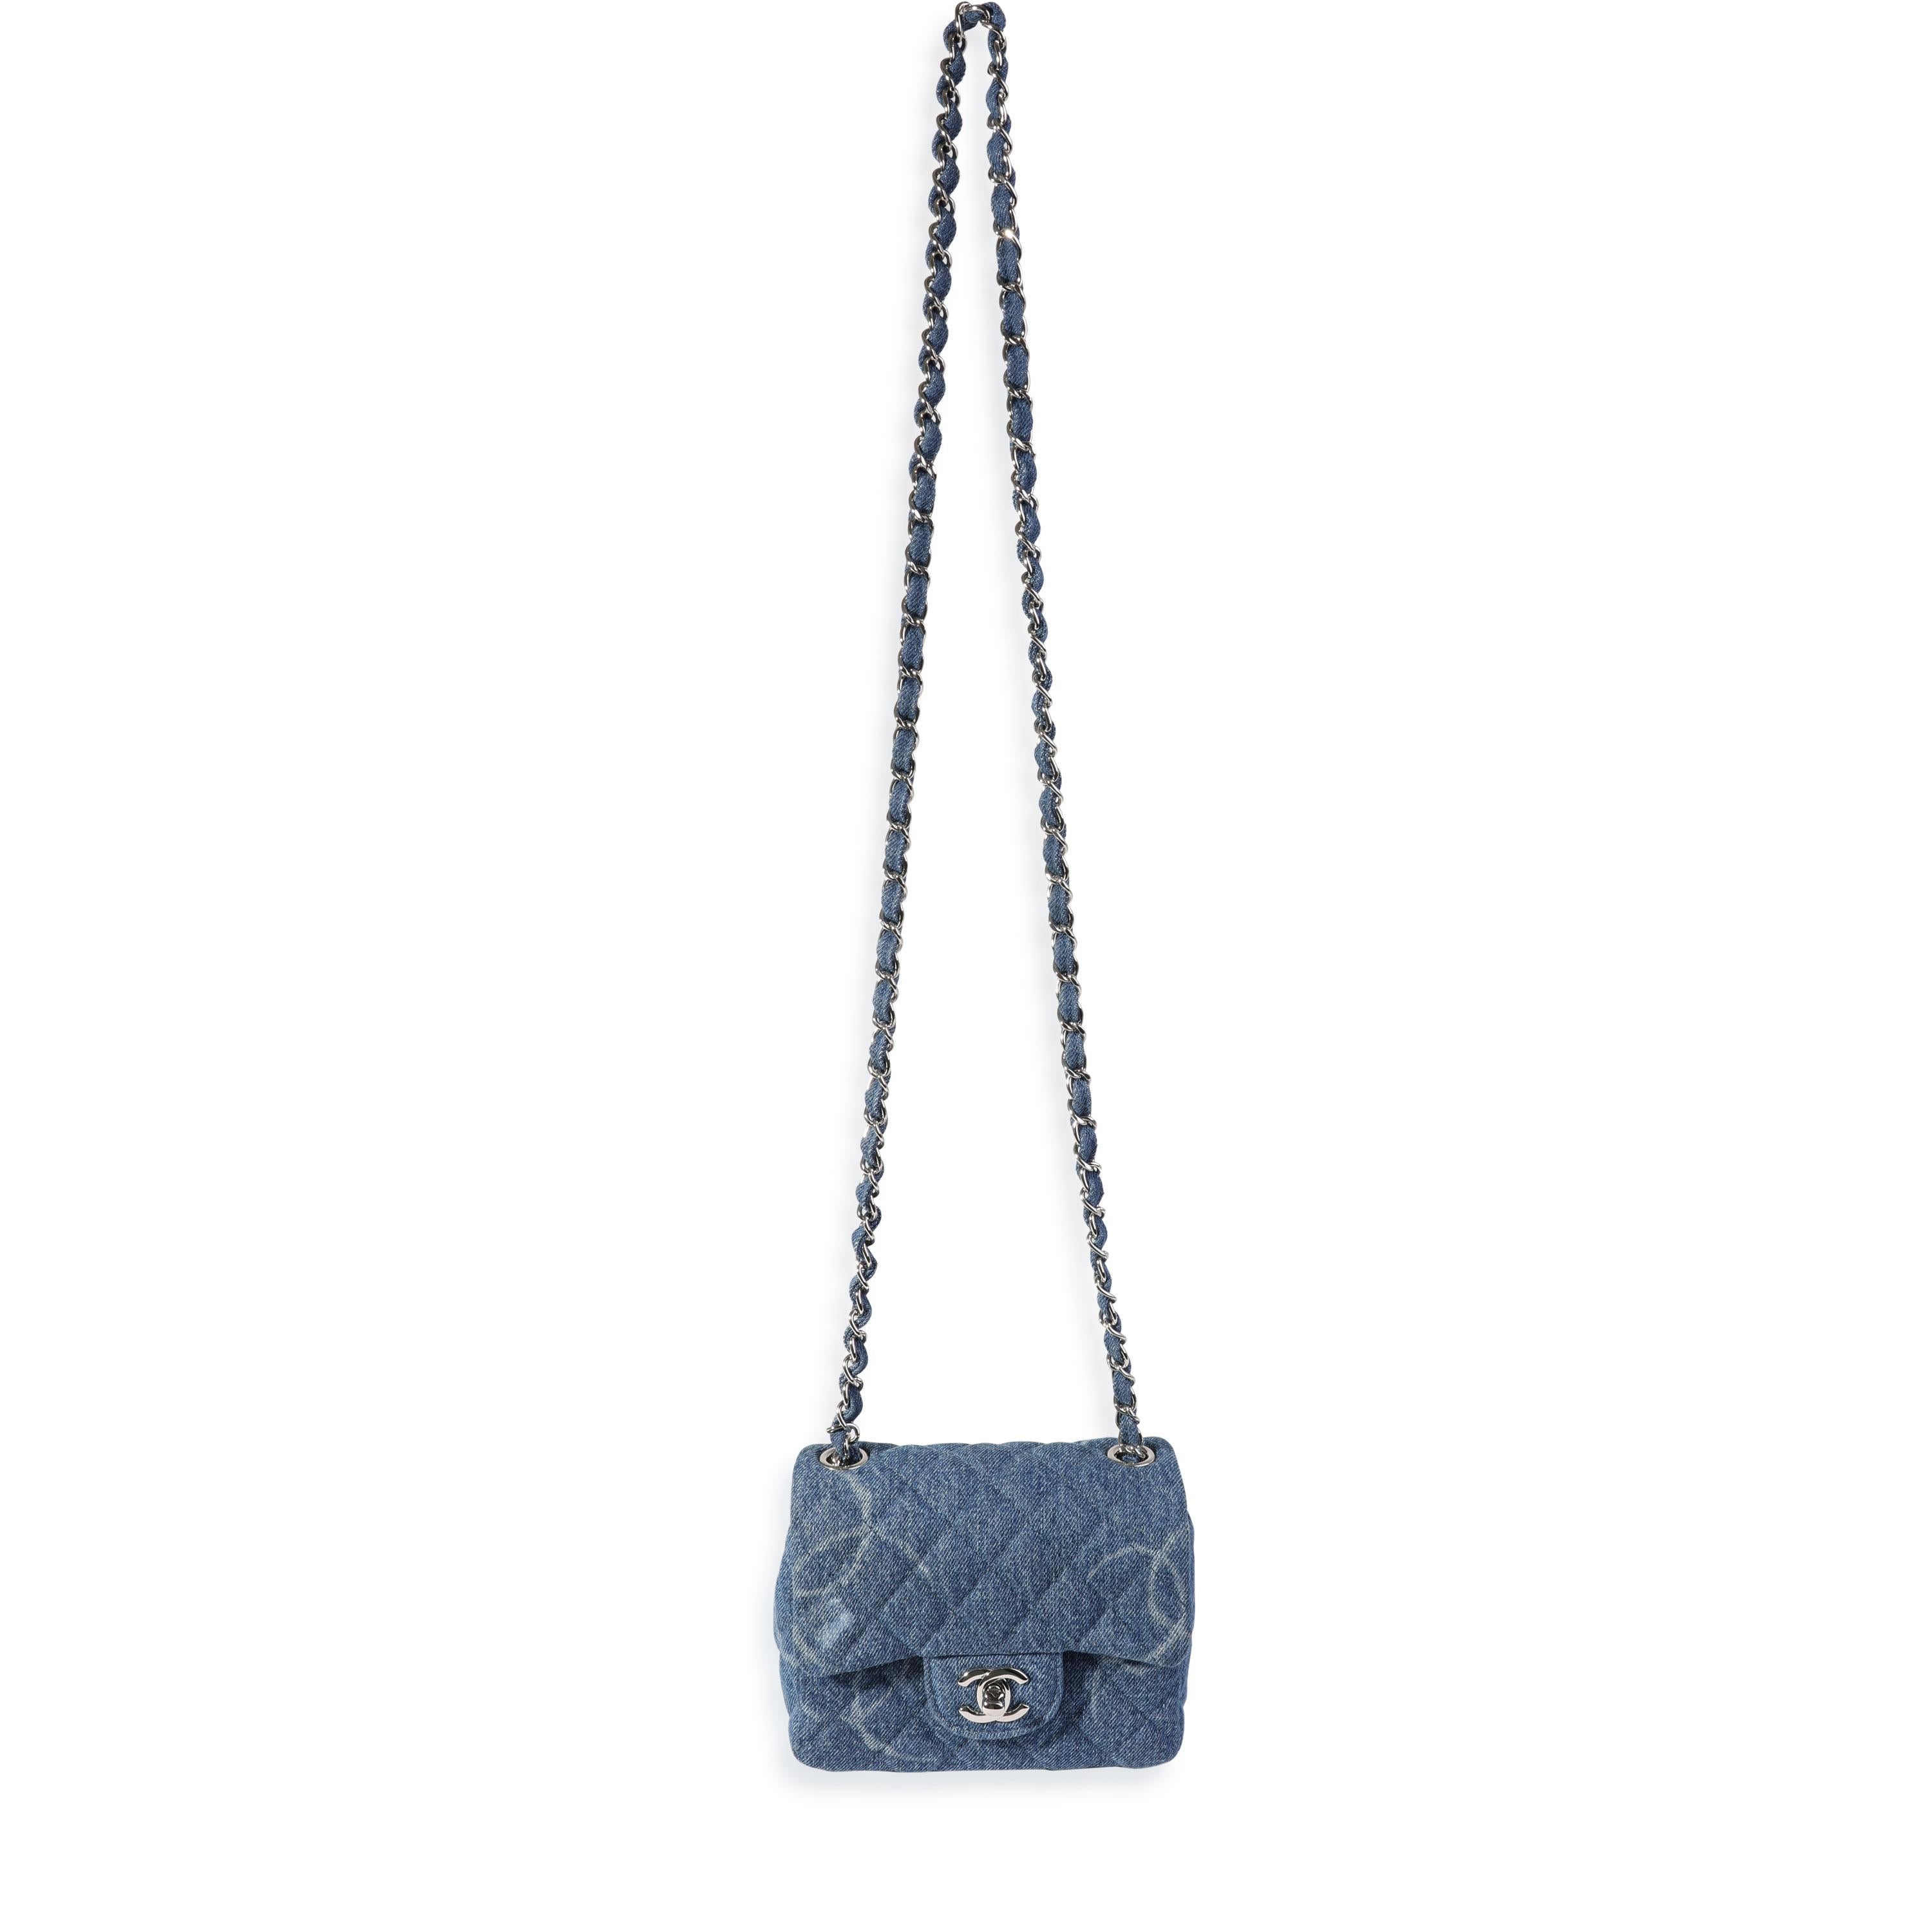 Listing Title: Chanel Blue Quilted Denim Square Mini Classic Flap Bag
SKU: 121230
Condition: Pre-owned 
Handbag Condition: Excellent
Brand: Chanel
Model: Denim Flap
Origin Country: France
Handbag Silhouette: Crossbody Bag;Shoulder Bag
Occasions: